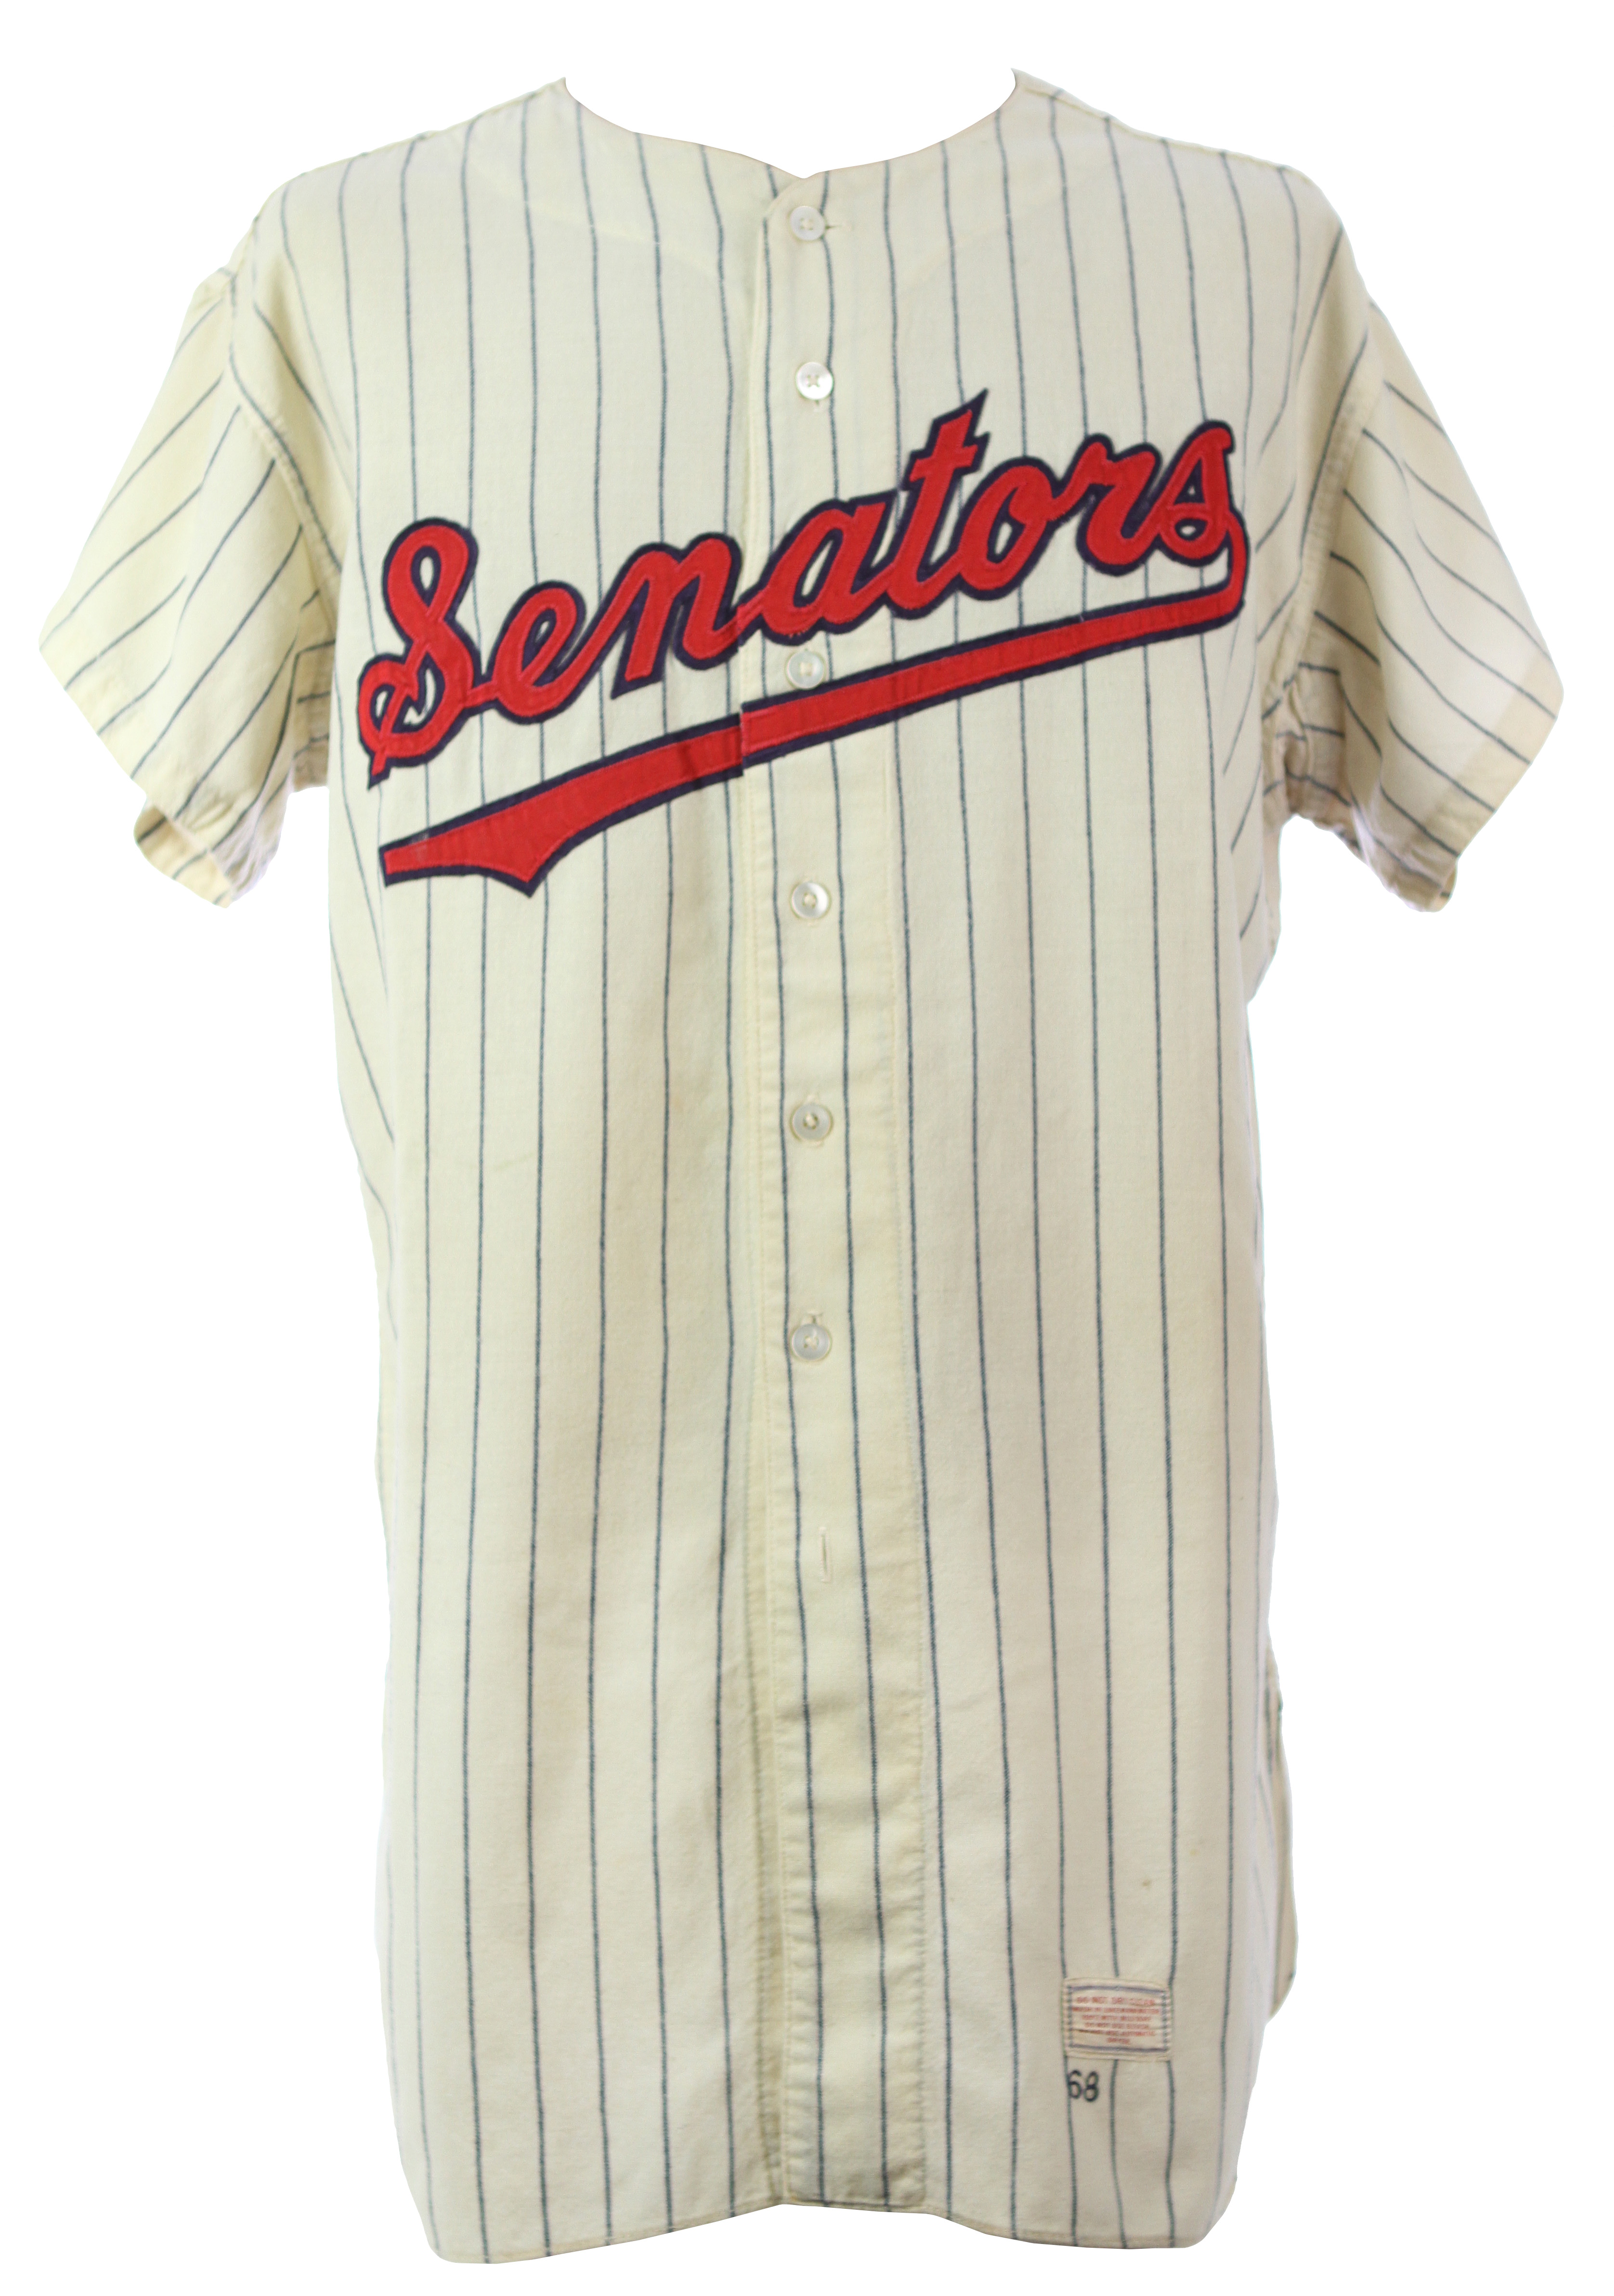 washington senators jersey